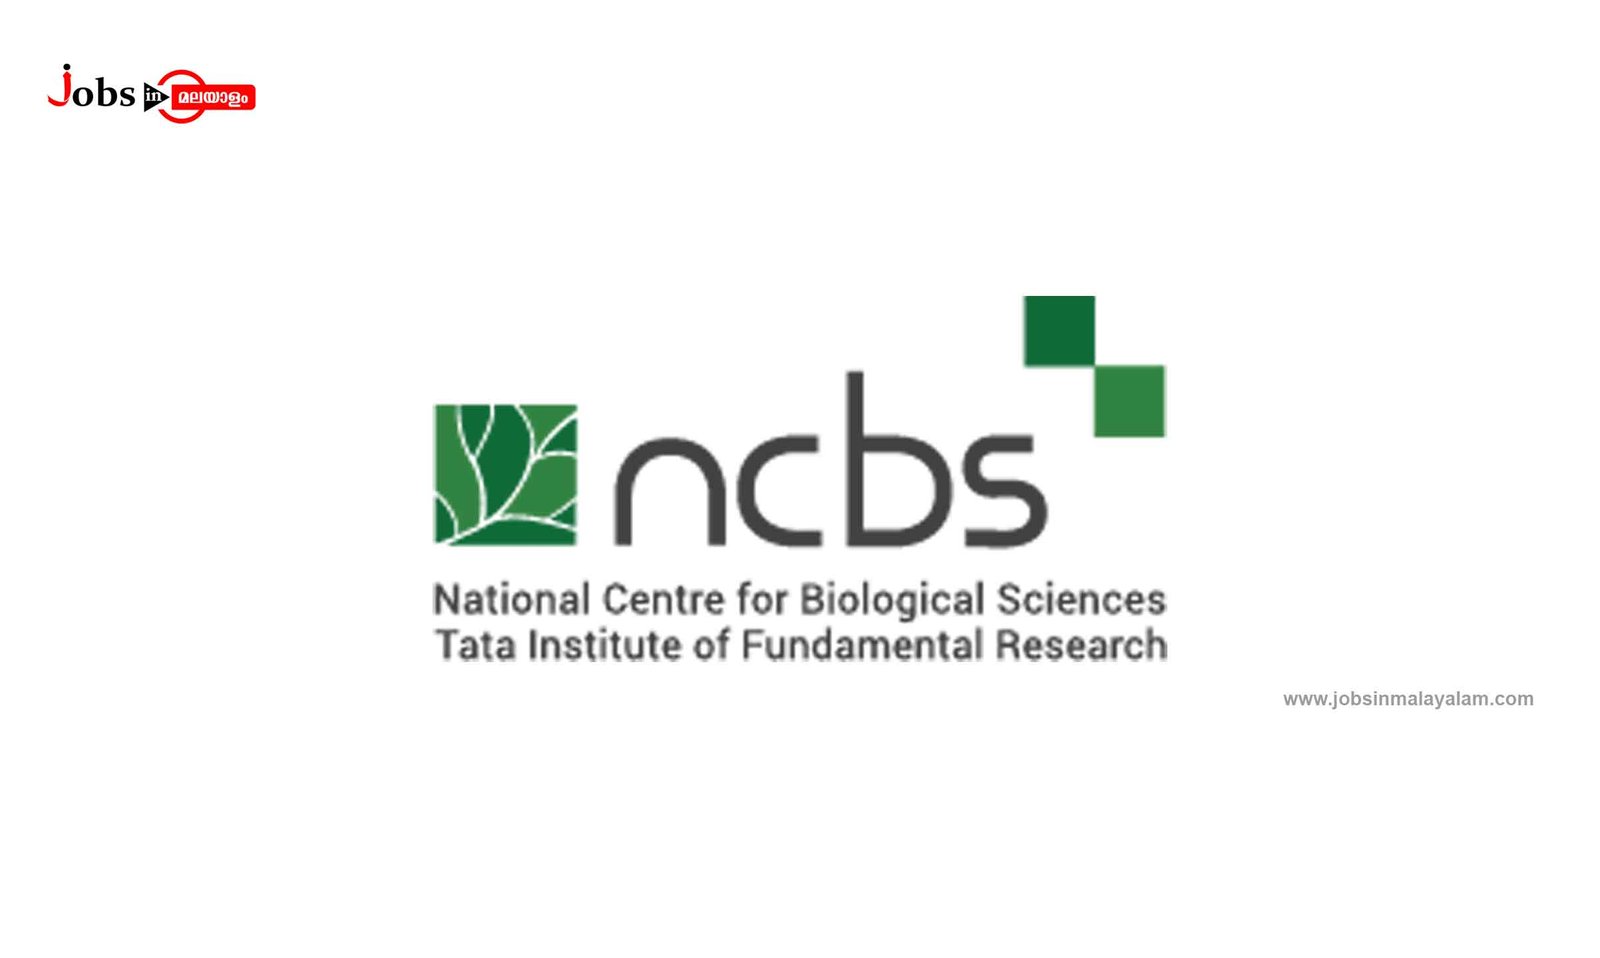 National Centre for Biological Sciences (NCBS)